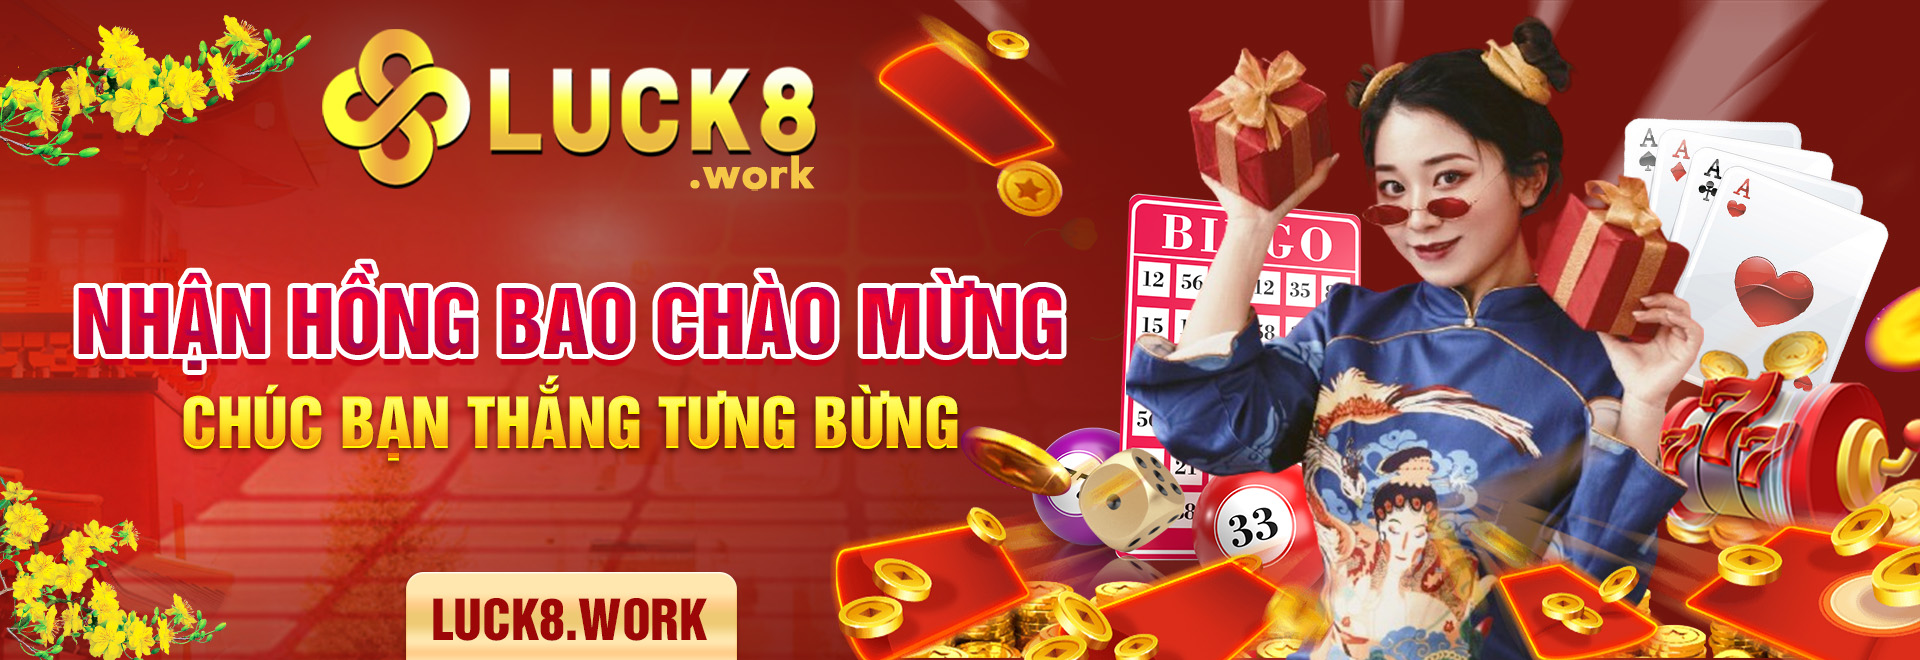 2-nhan-hong-bao-chao-mung-chuc-ban-thang-tung-bung